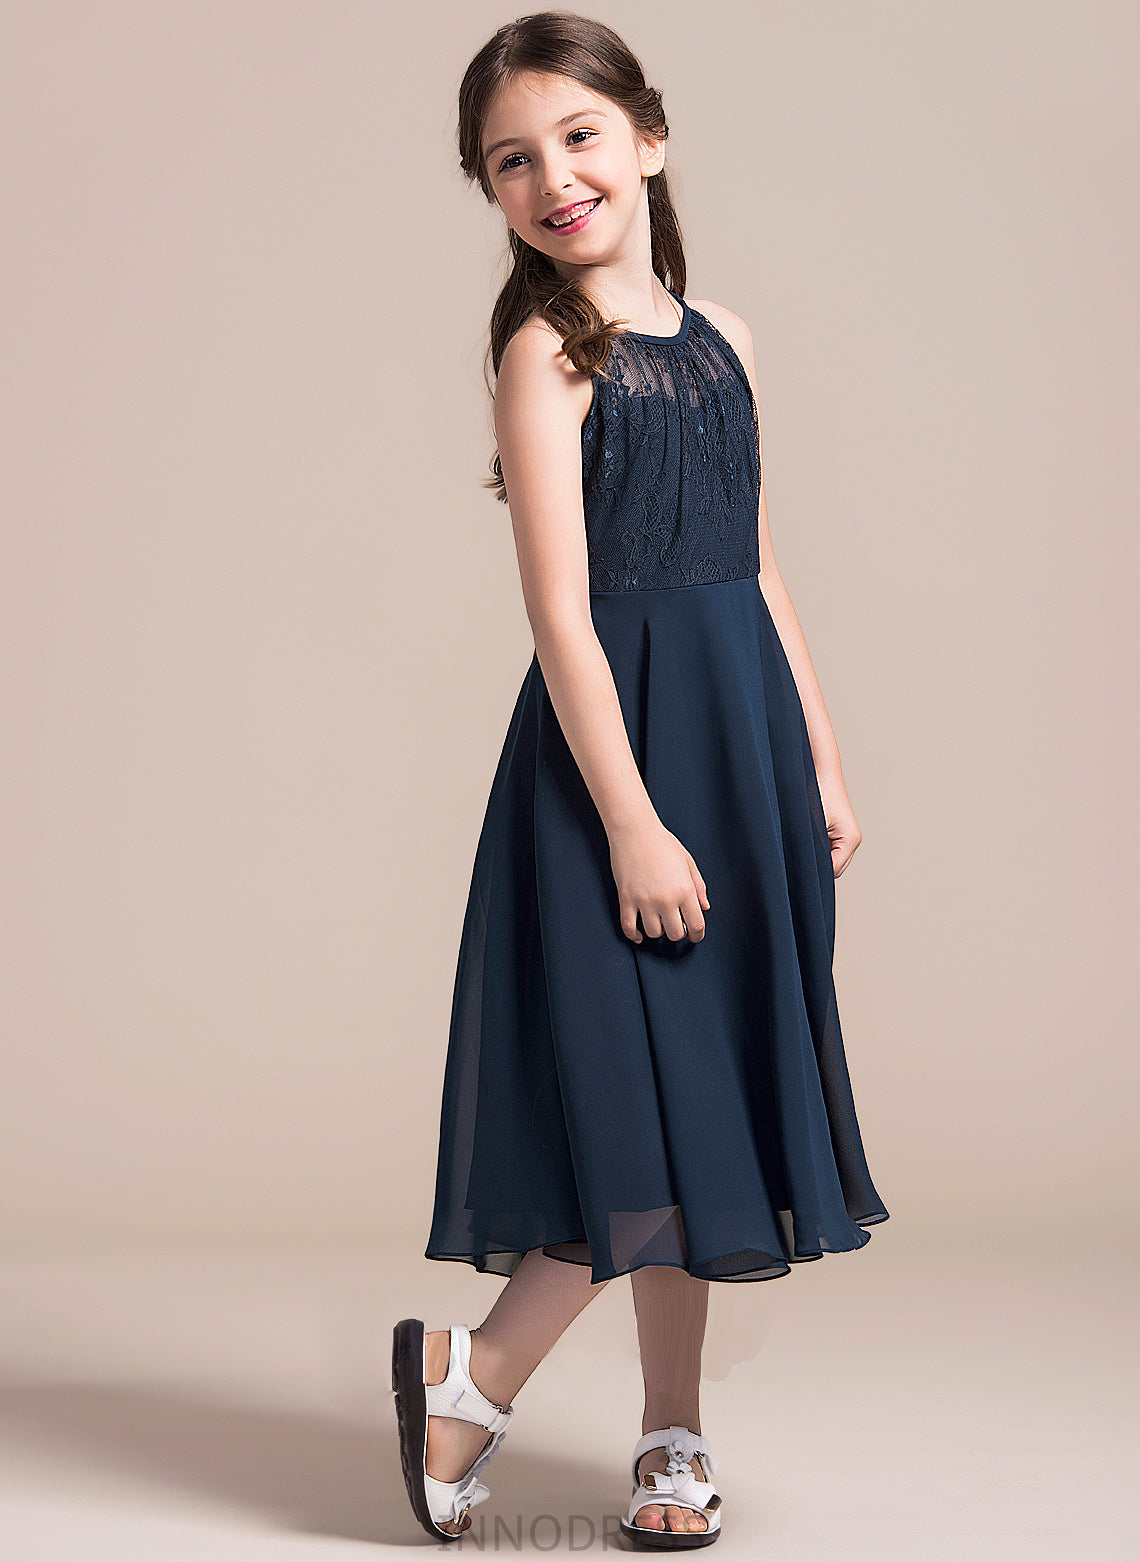 Azul A-Line Junior Bridesmaid Dresses With Neck Ruffle Tea-Length Lace Scoop Chiffon